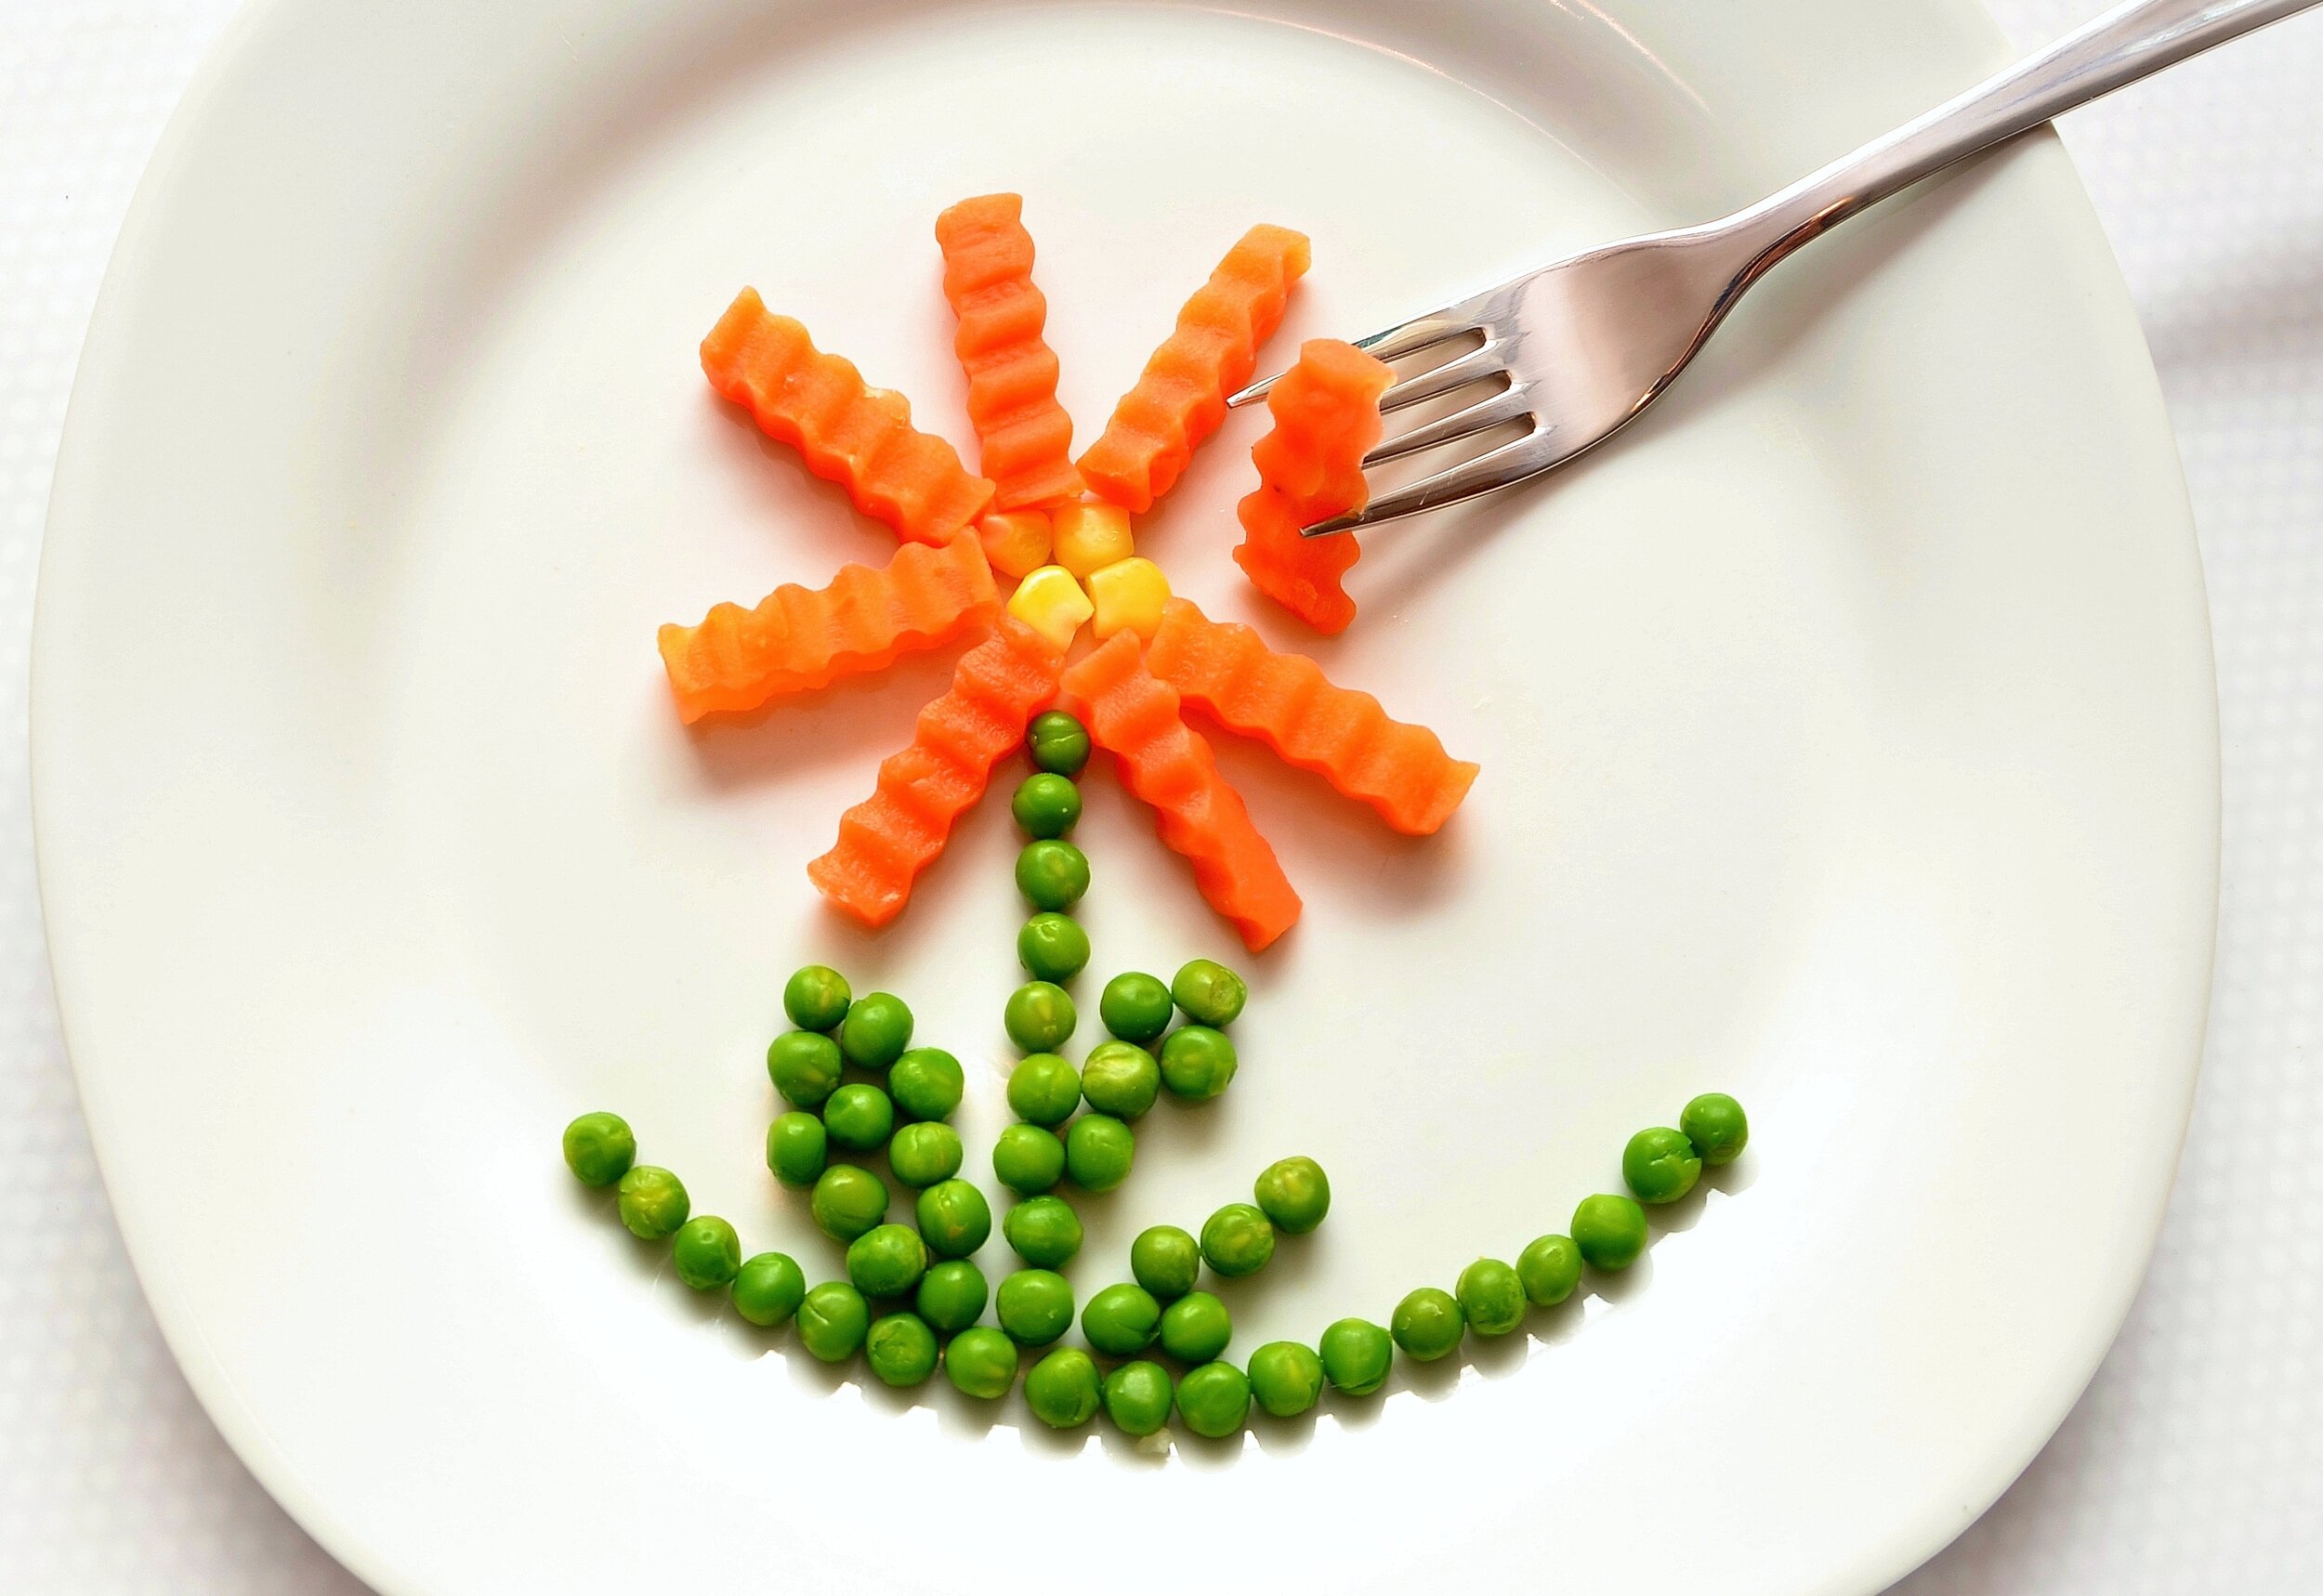 eat-carrots-peas-healthy-45218.jpg